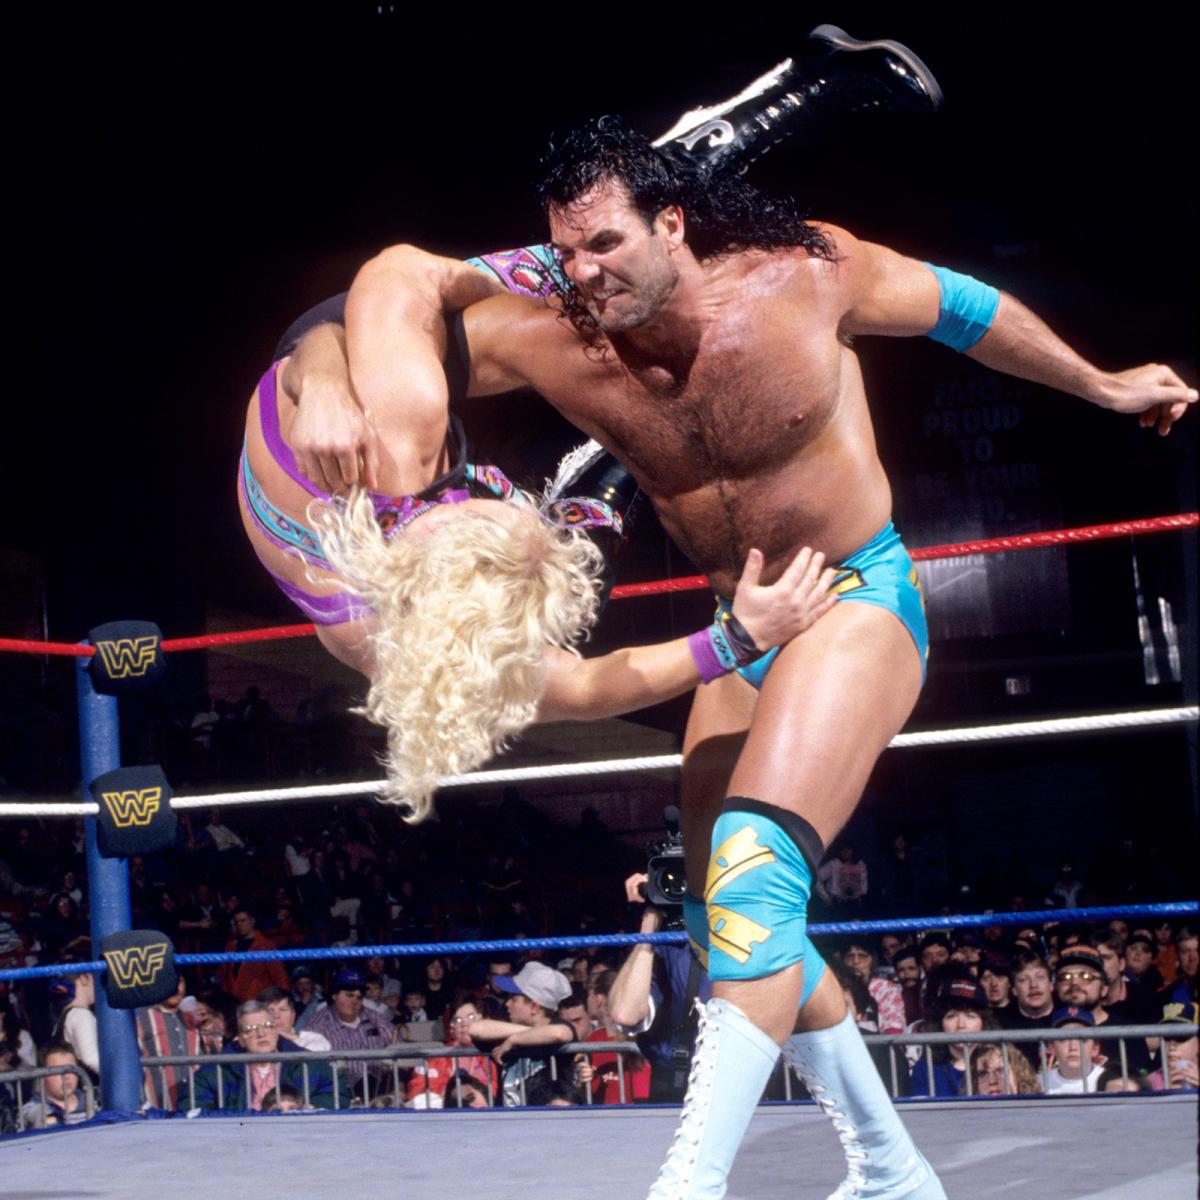 On this day in 1995: 'Double J' Jeff Jarrett defended his Intercontinental title against Razor Ramon on Raw. #WWF #WWE #Wrestling #JeffJarrett #RazorRamon